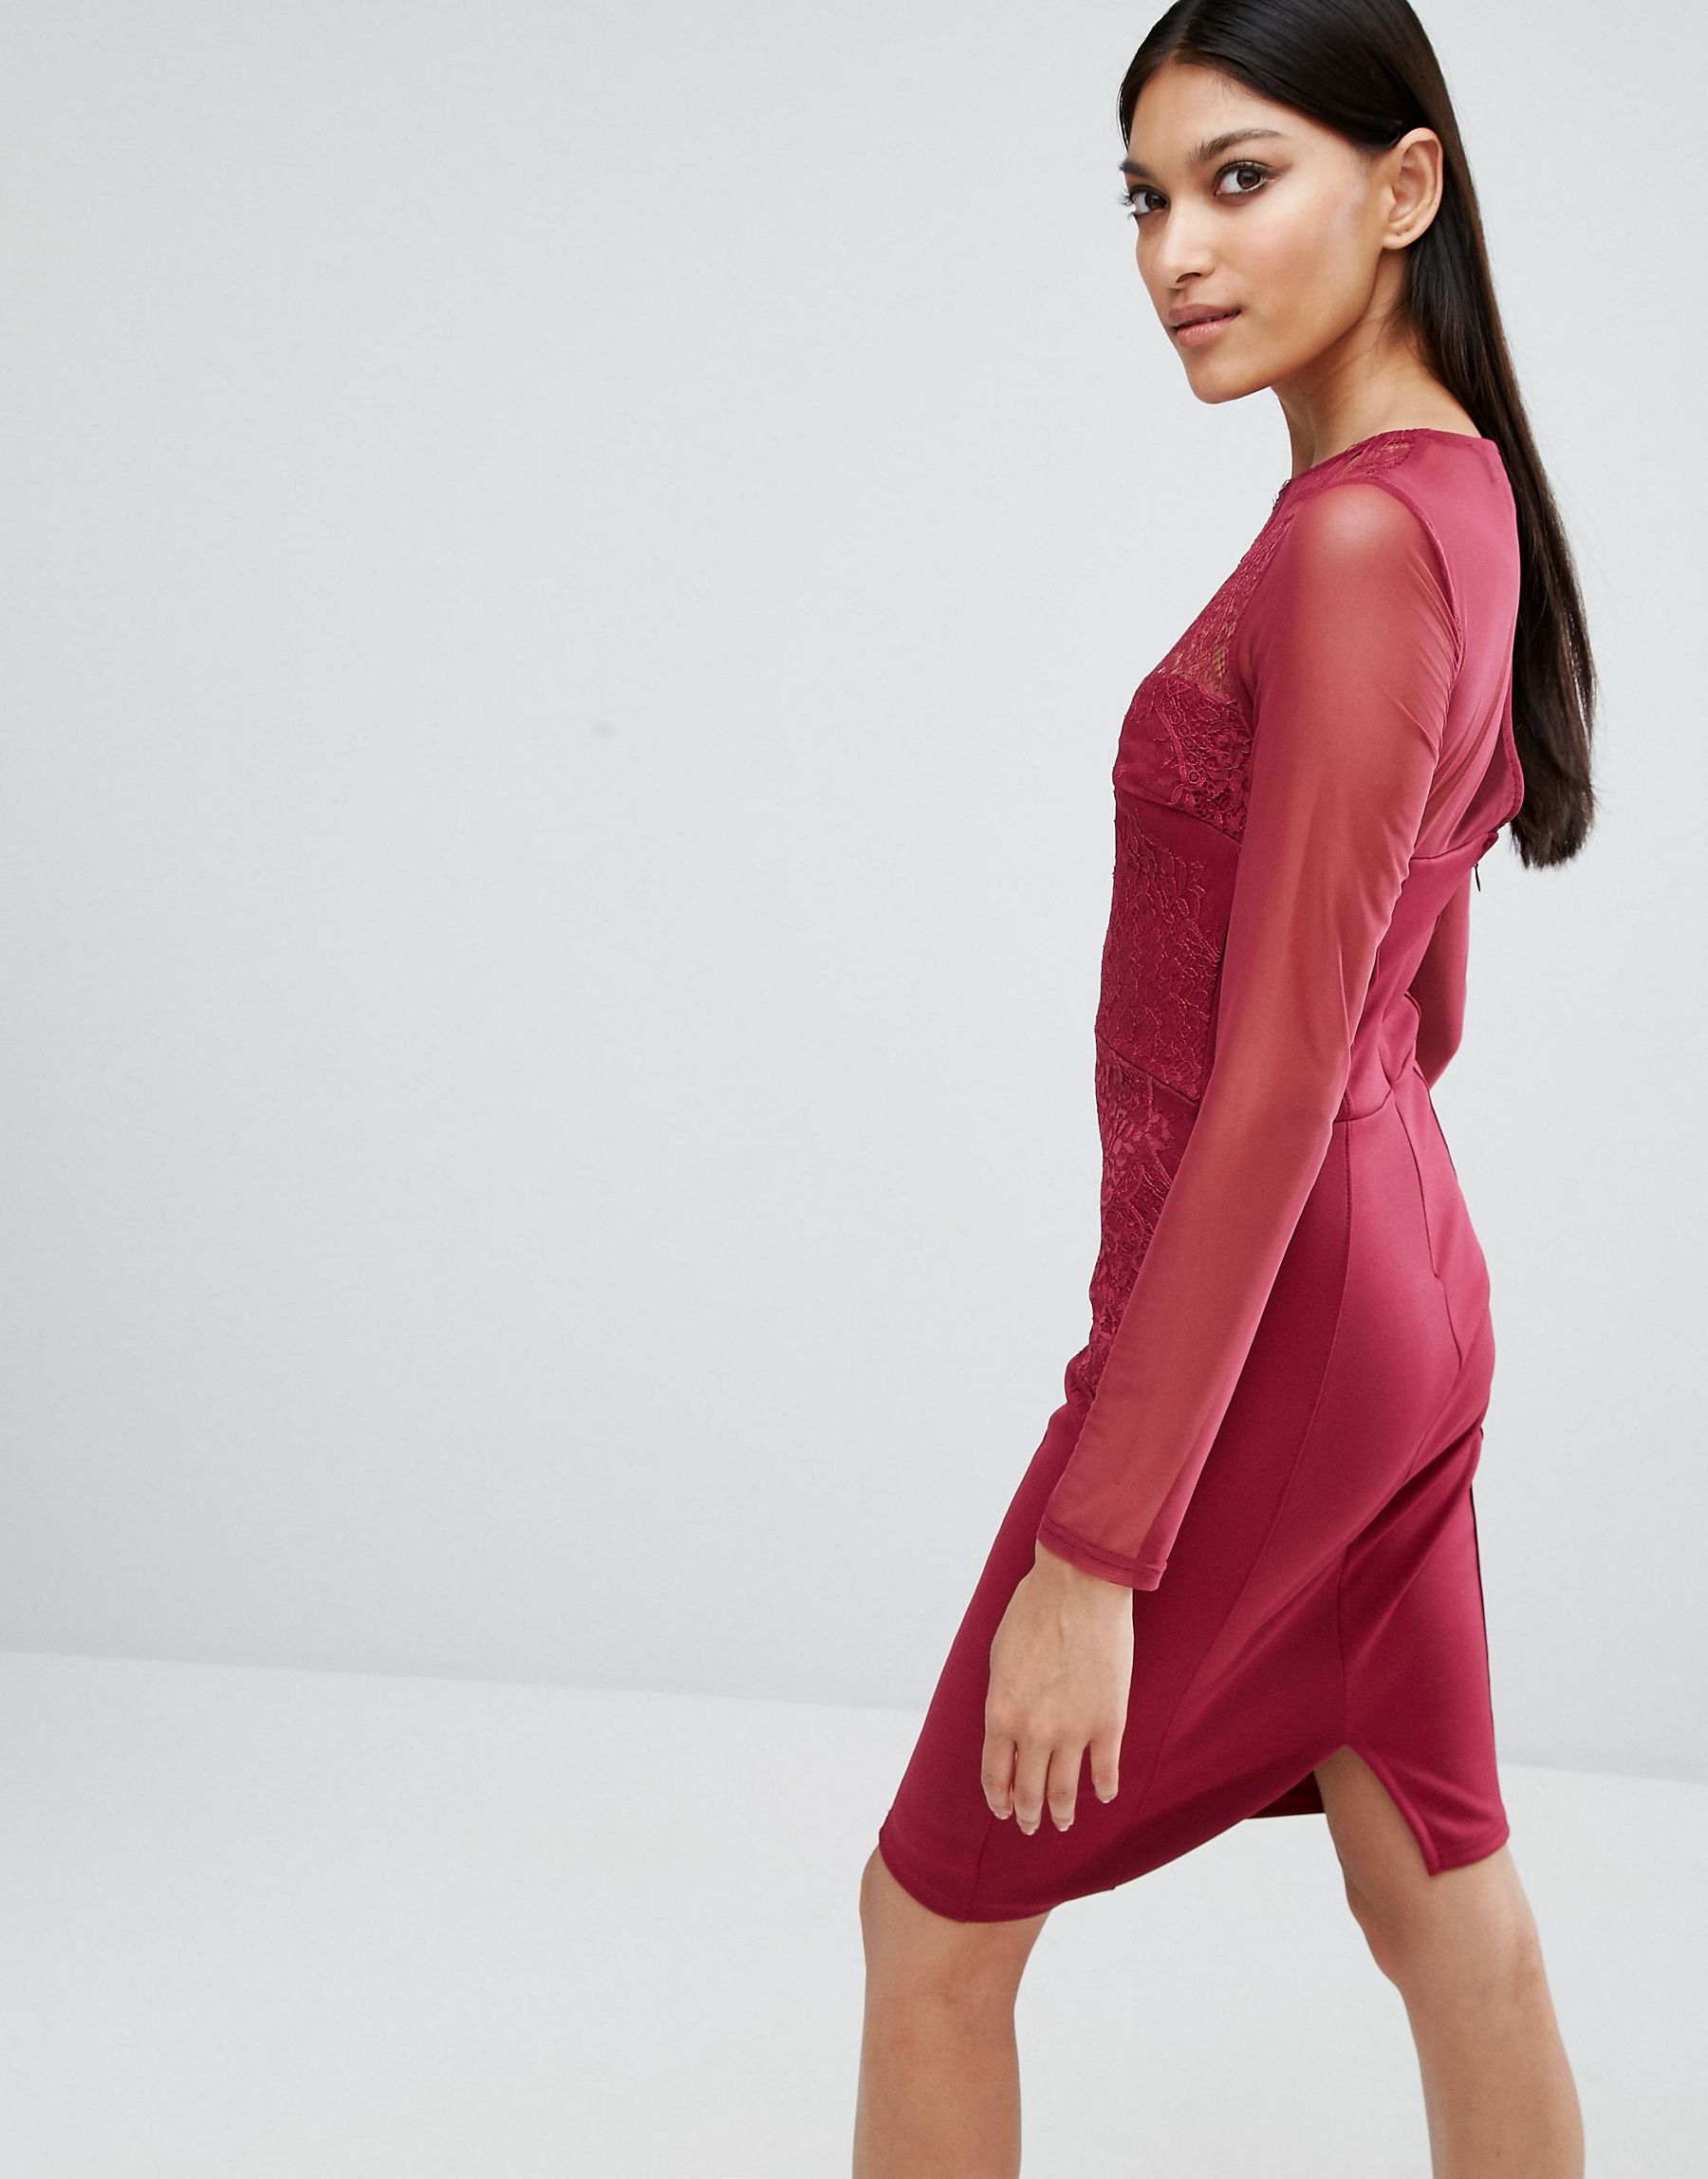 Lyst - Lipsy Michelle Keegan Loves Long Sleeve Lace Midi Dress in Red